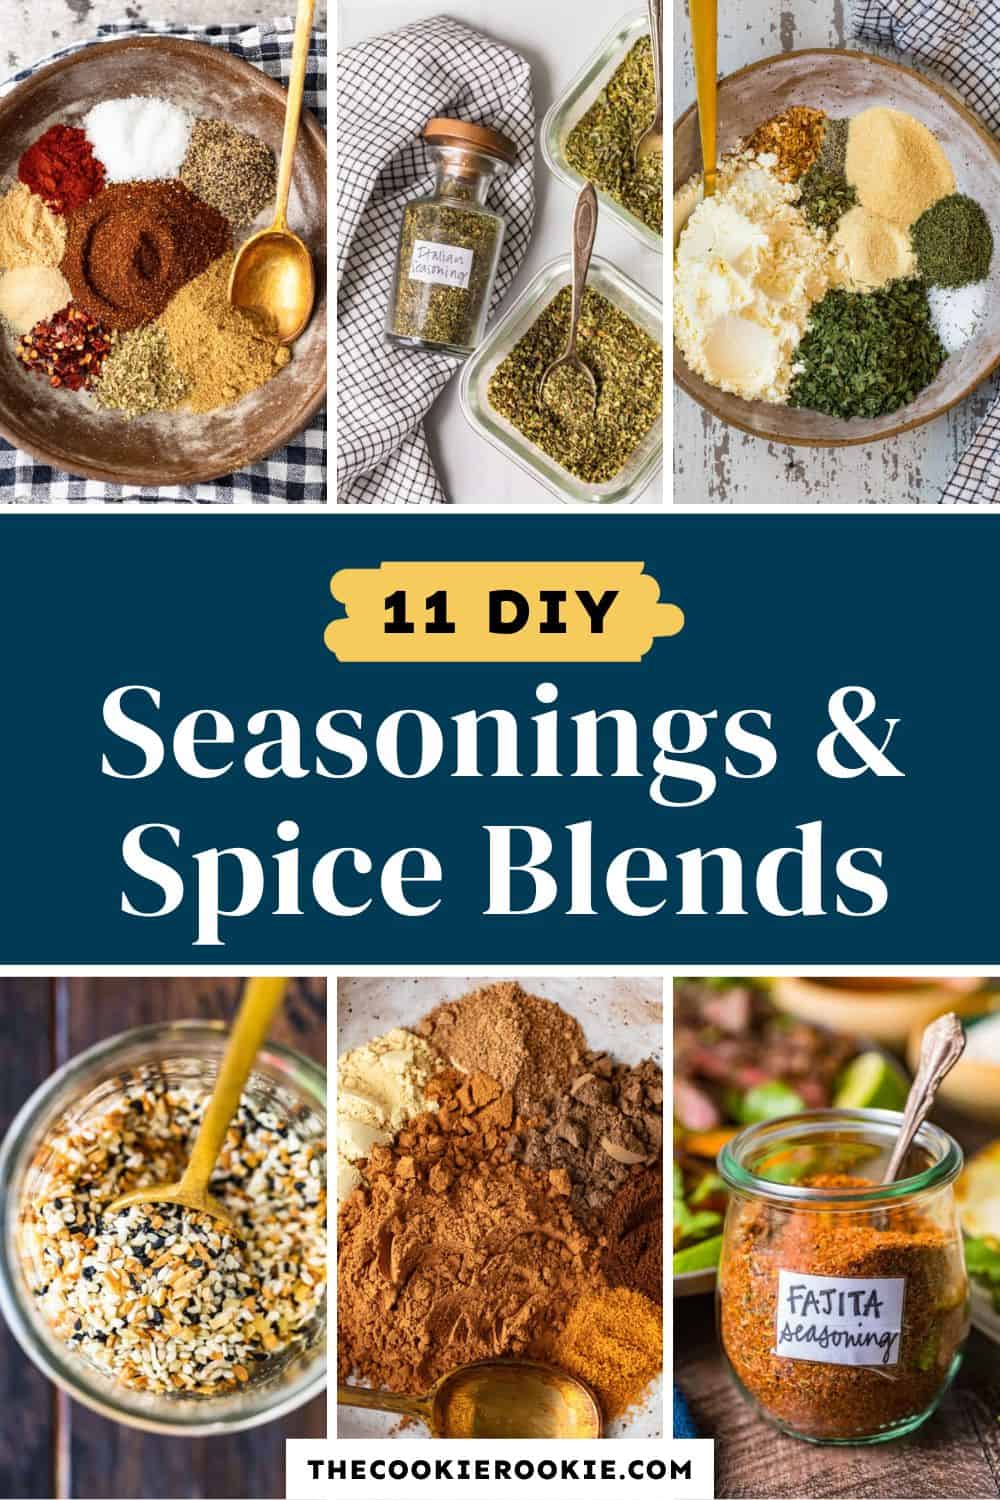 https://www.thecookierookie.com/wp-content/uploads/2022/10/homemade-seasonings-spice-blends.jpg